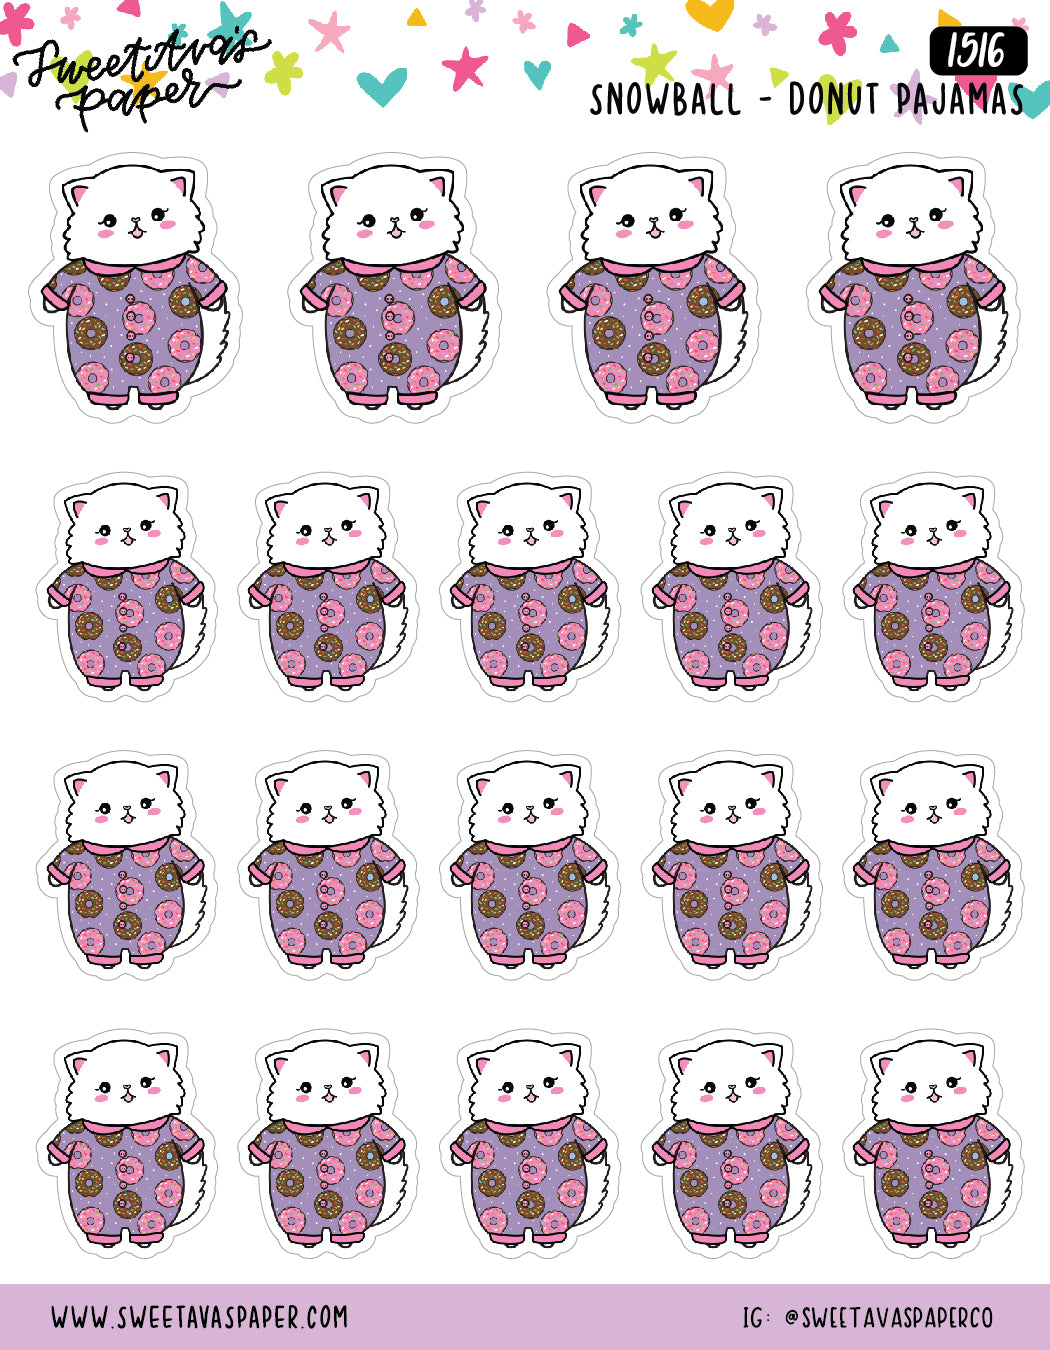 Doughnut Pajamas Planner Stickers - Snowball The Cat [1516]